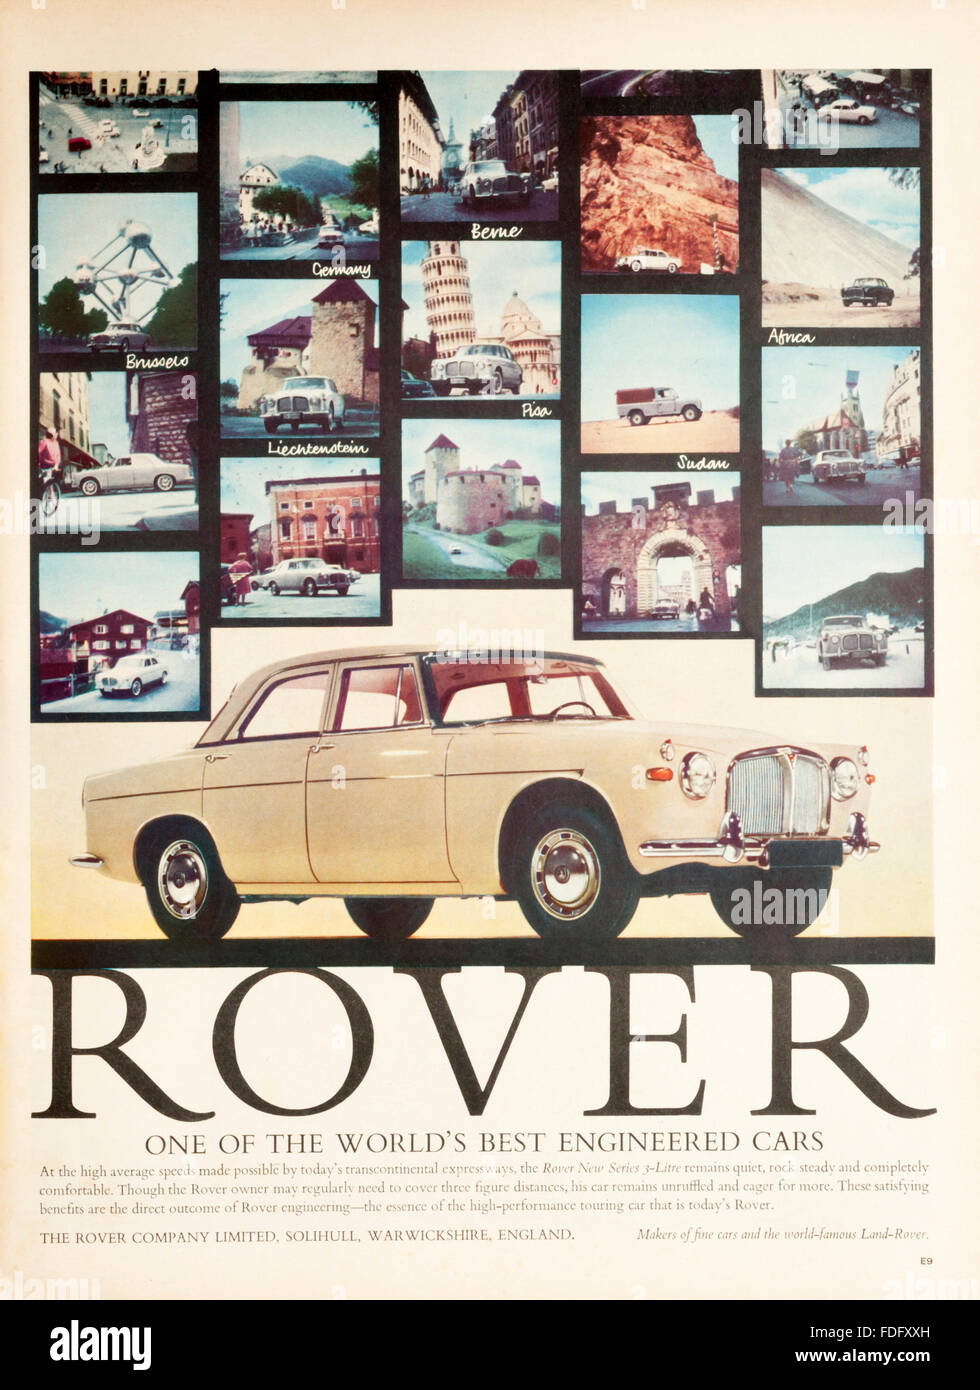 1960s magazine advertisement advertising Rover cars. Stock Photo